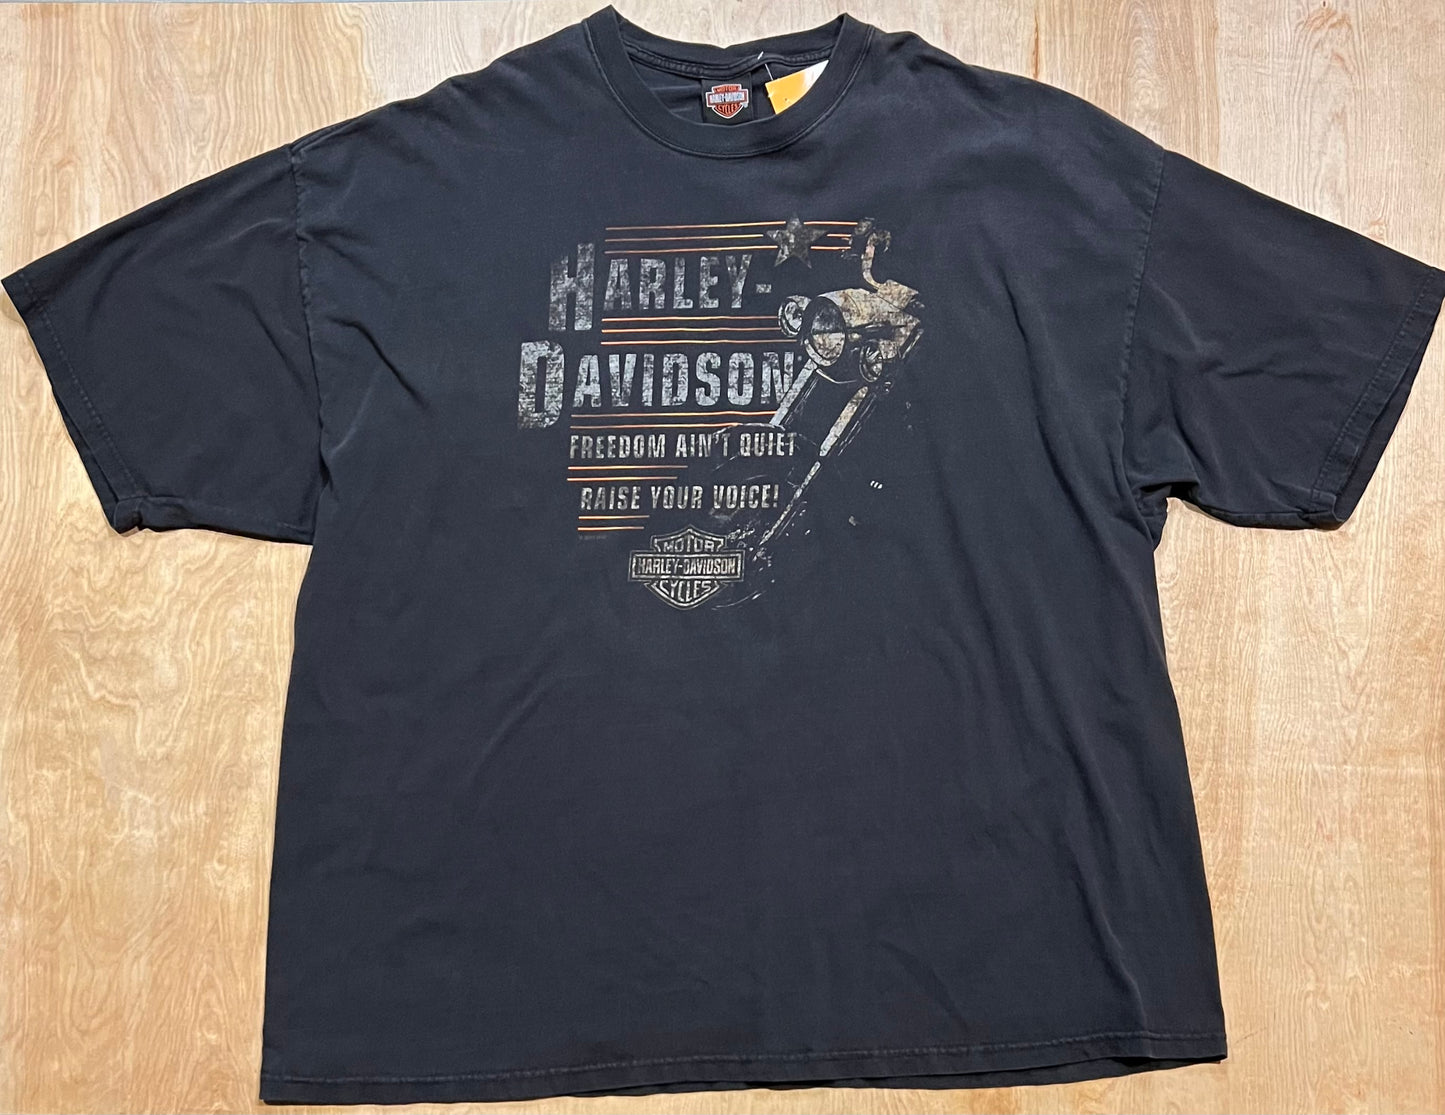 Harley Davidson Reno Nevada T-Shirt